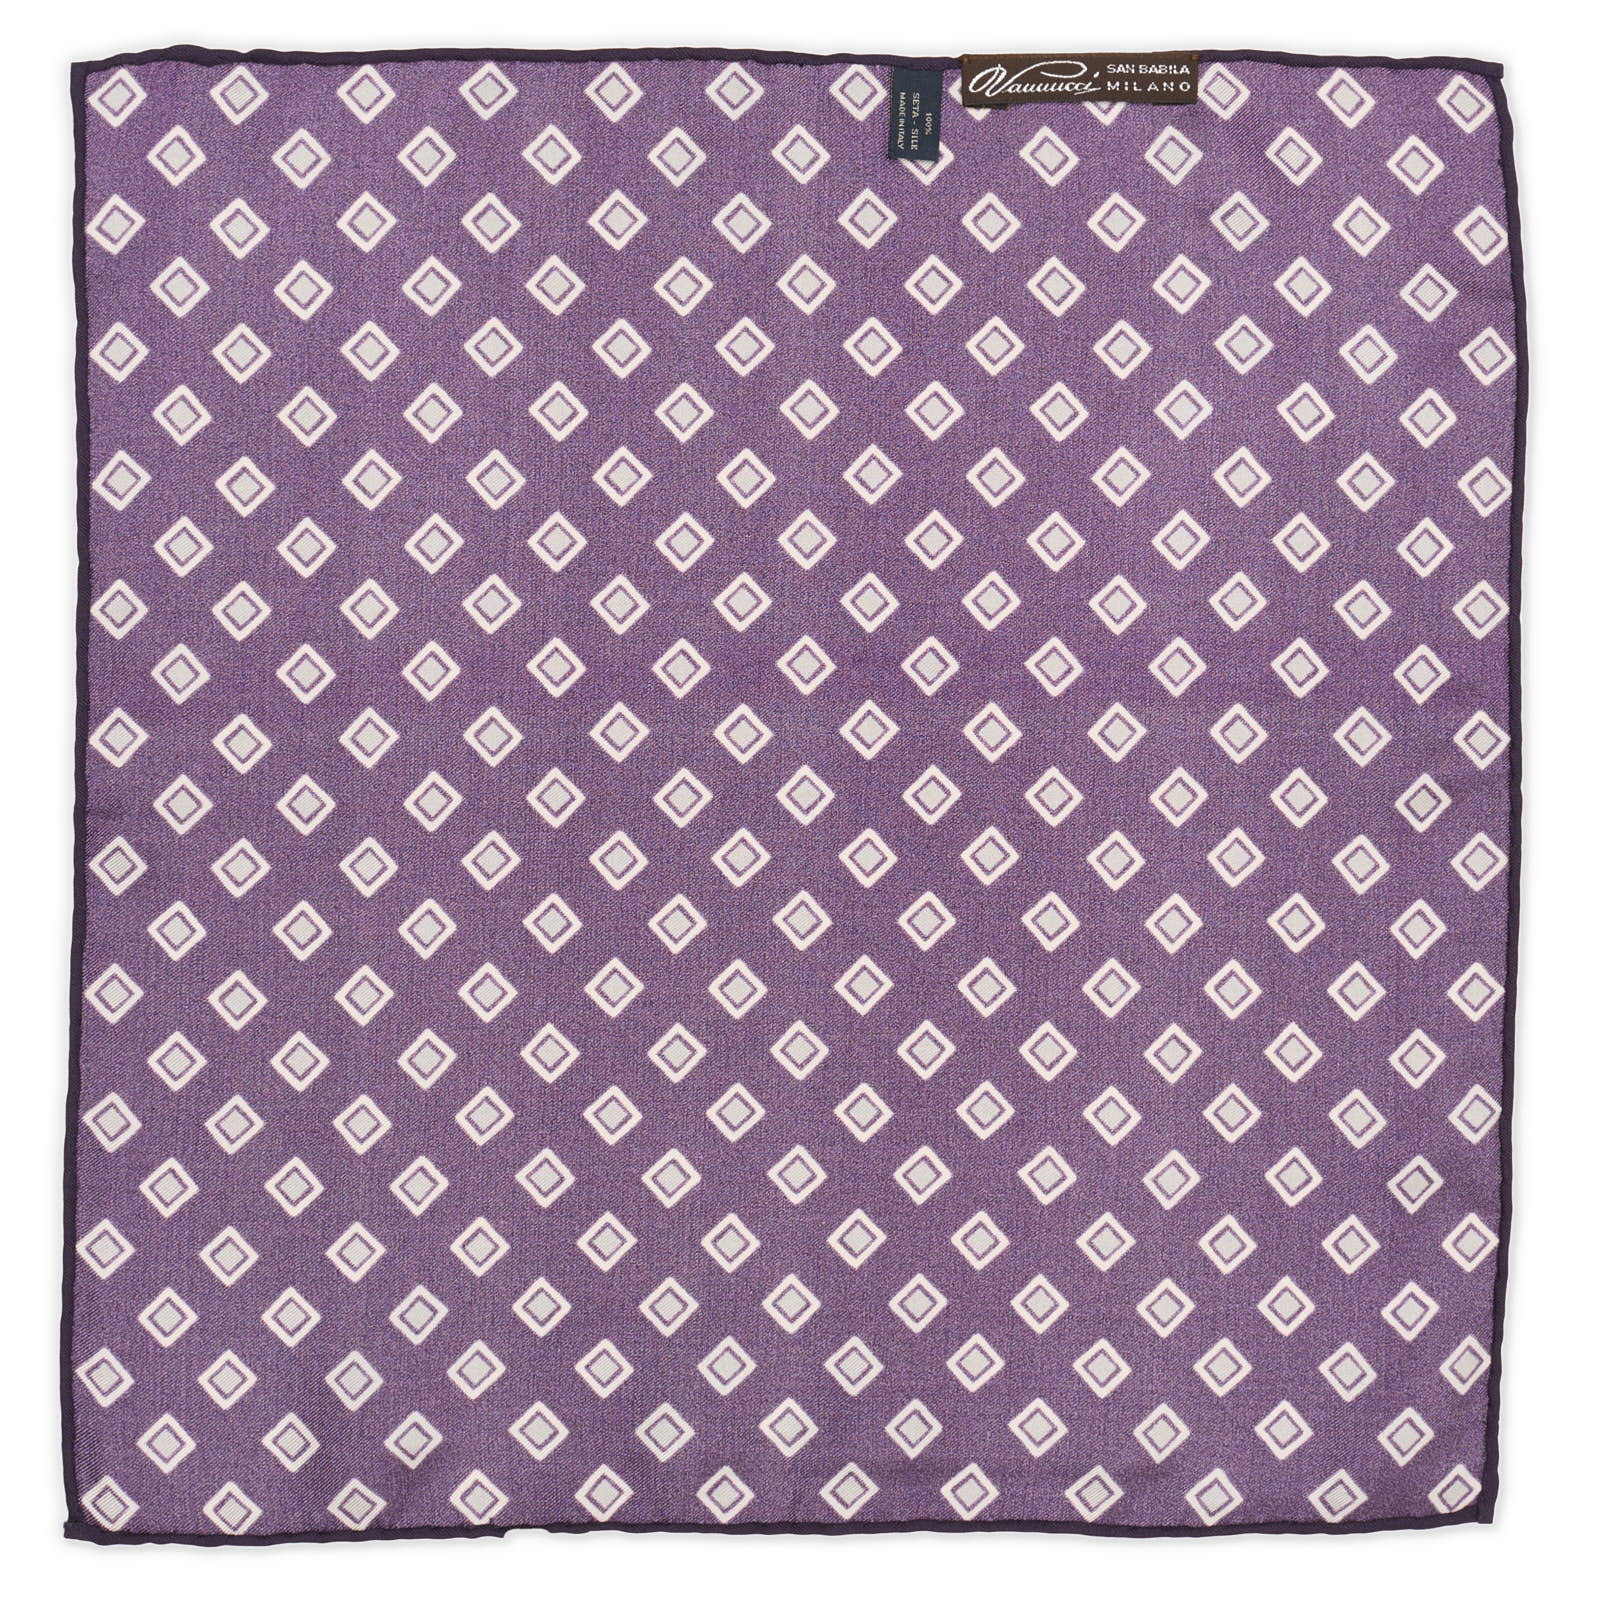 VANNUCCI Milano Handmade Purple Medallion Silk Pocket Square NEW 31cm x 31cm